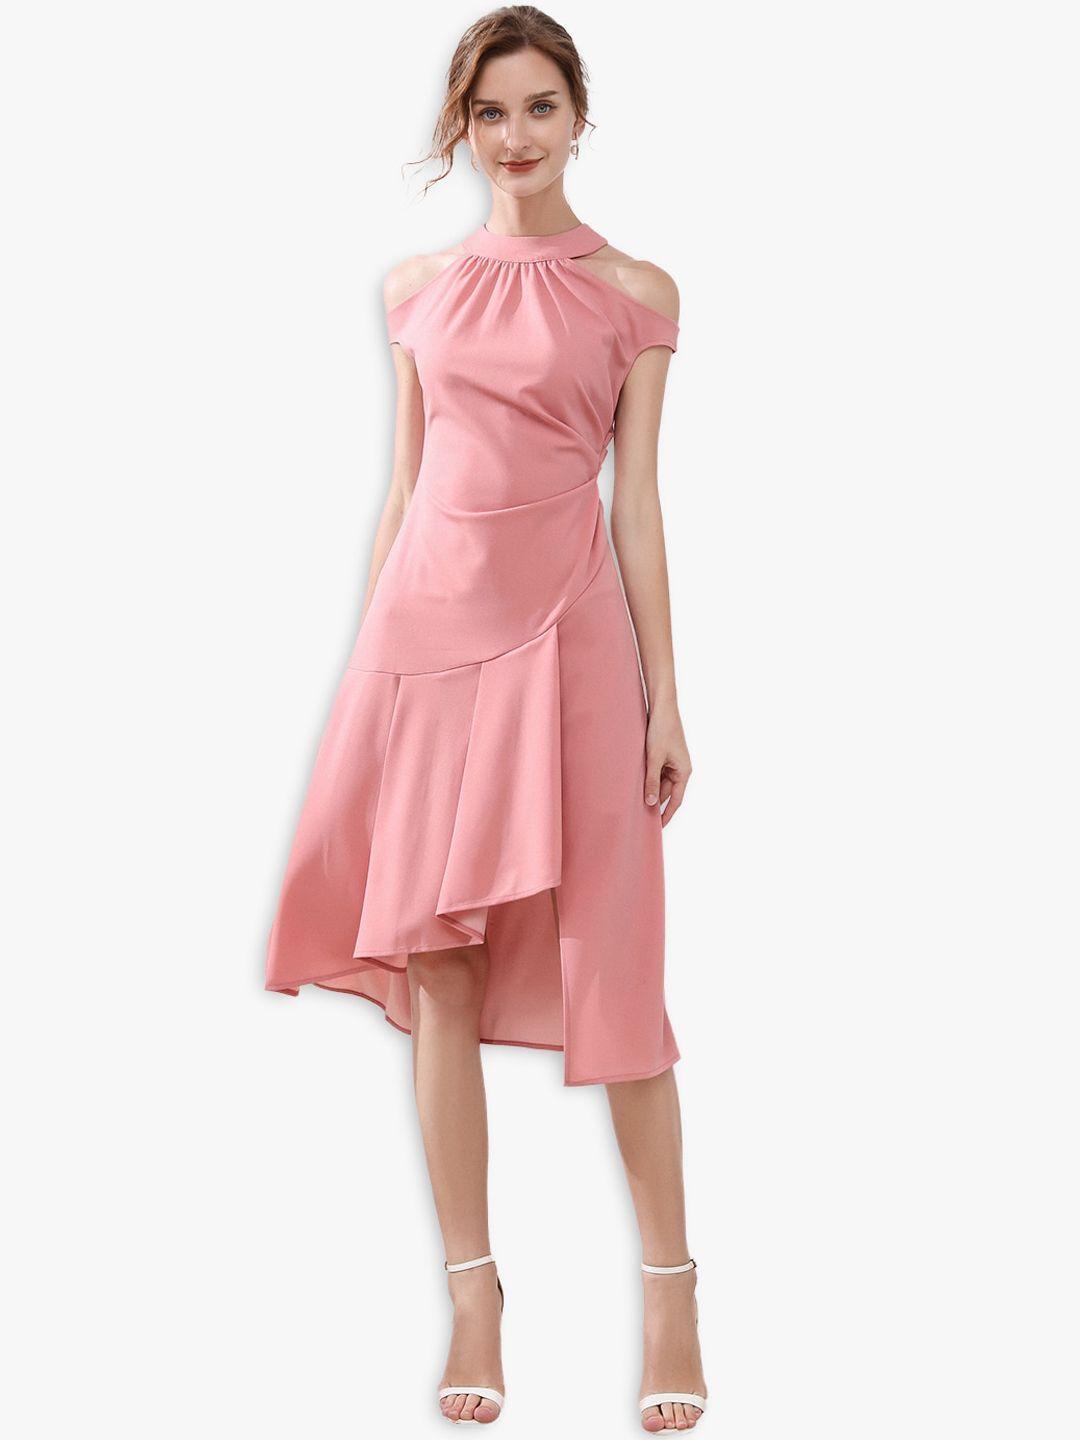 jc collection women pink a-line dress